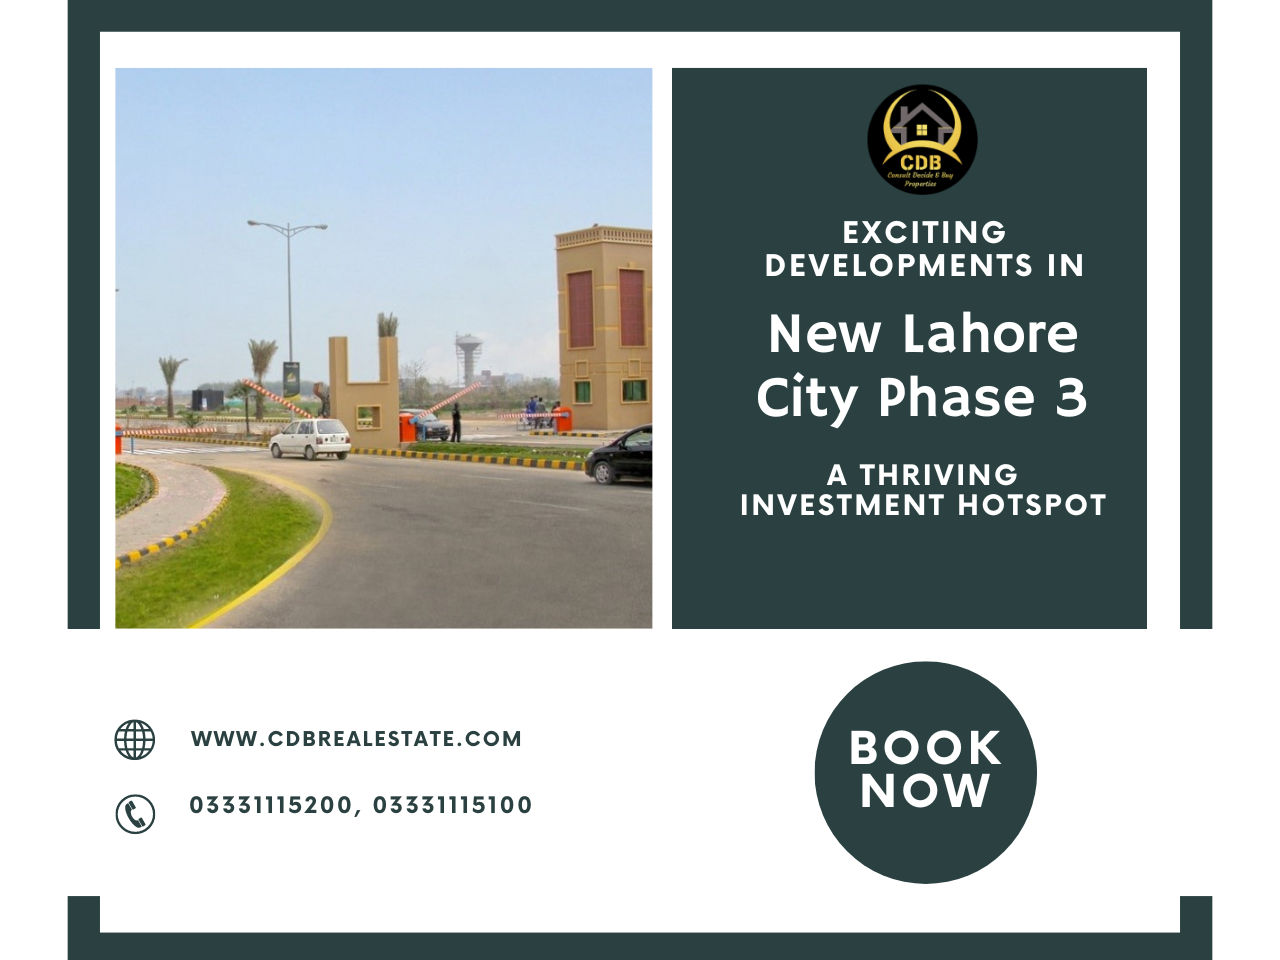 New Lahore City Phase 3